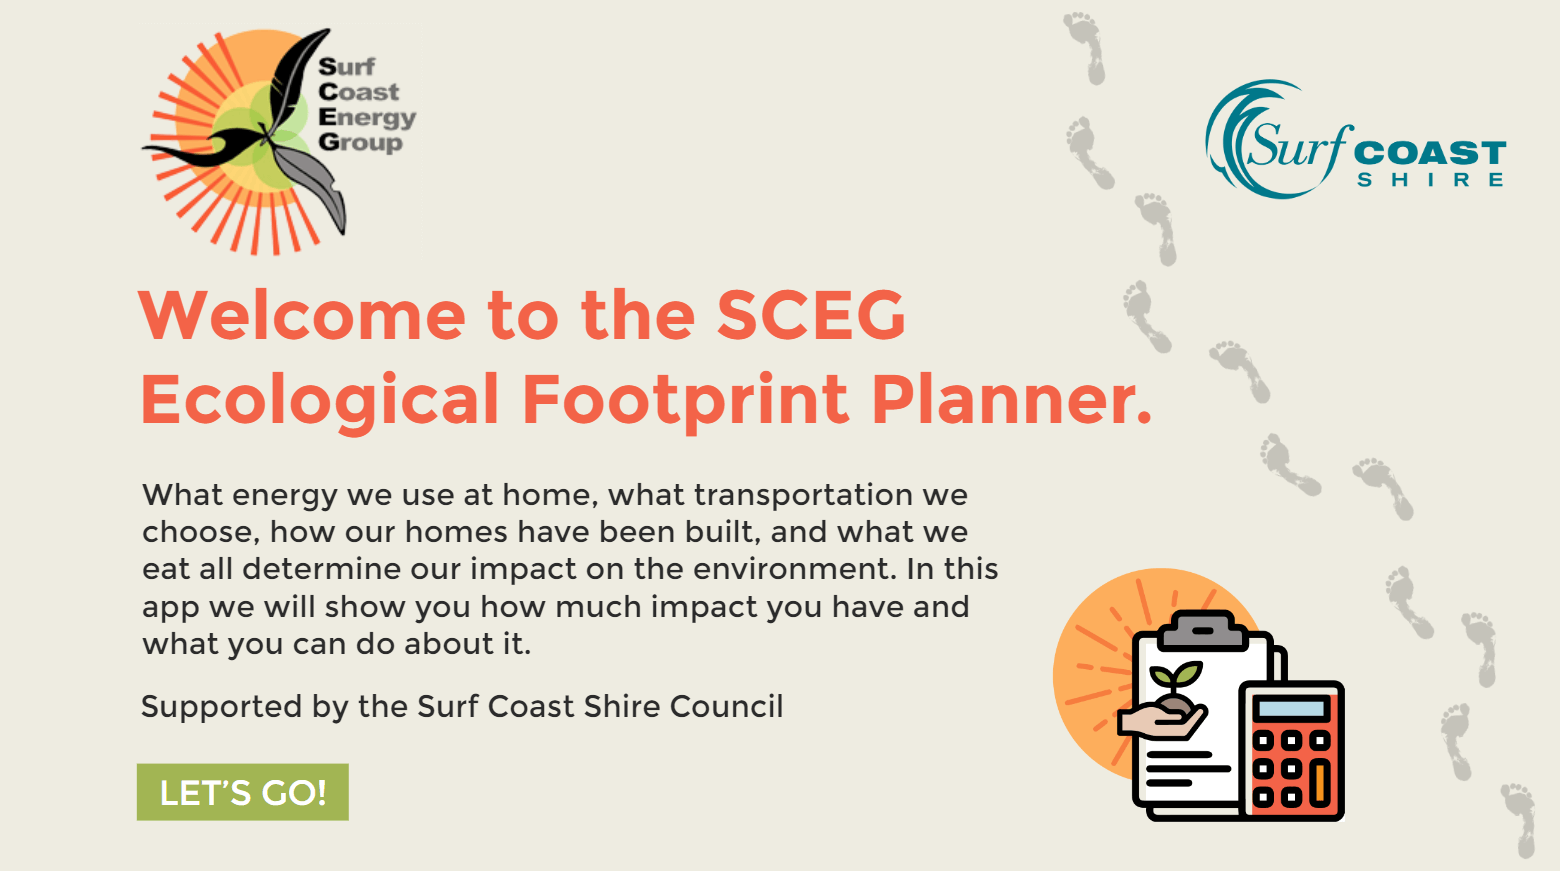 Surf Coast Energy Group’s Ecological Footprint Planner